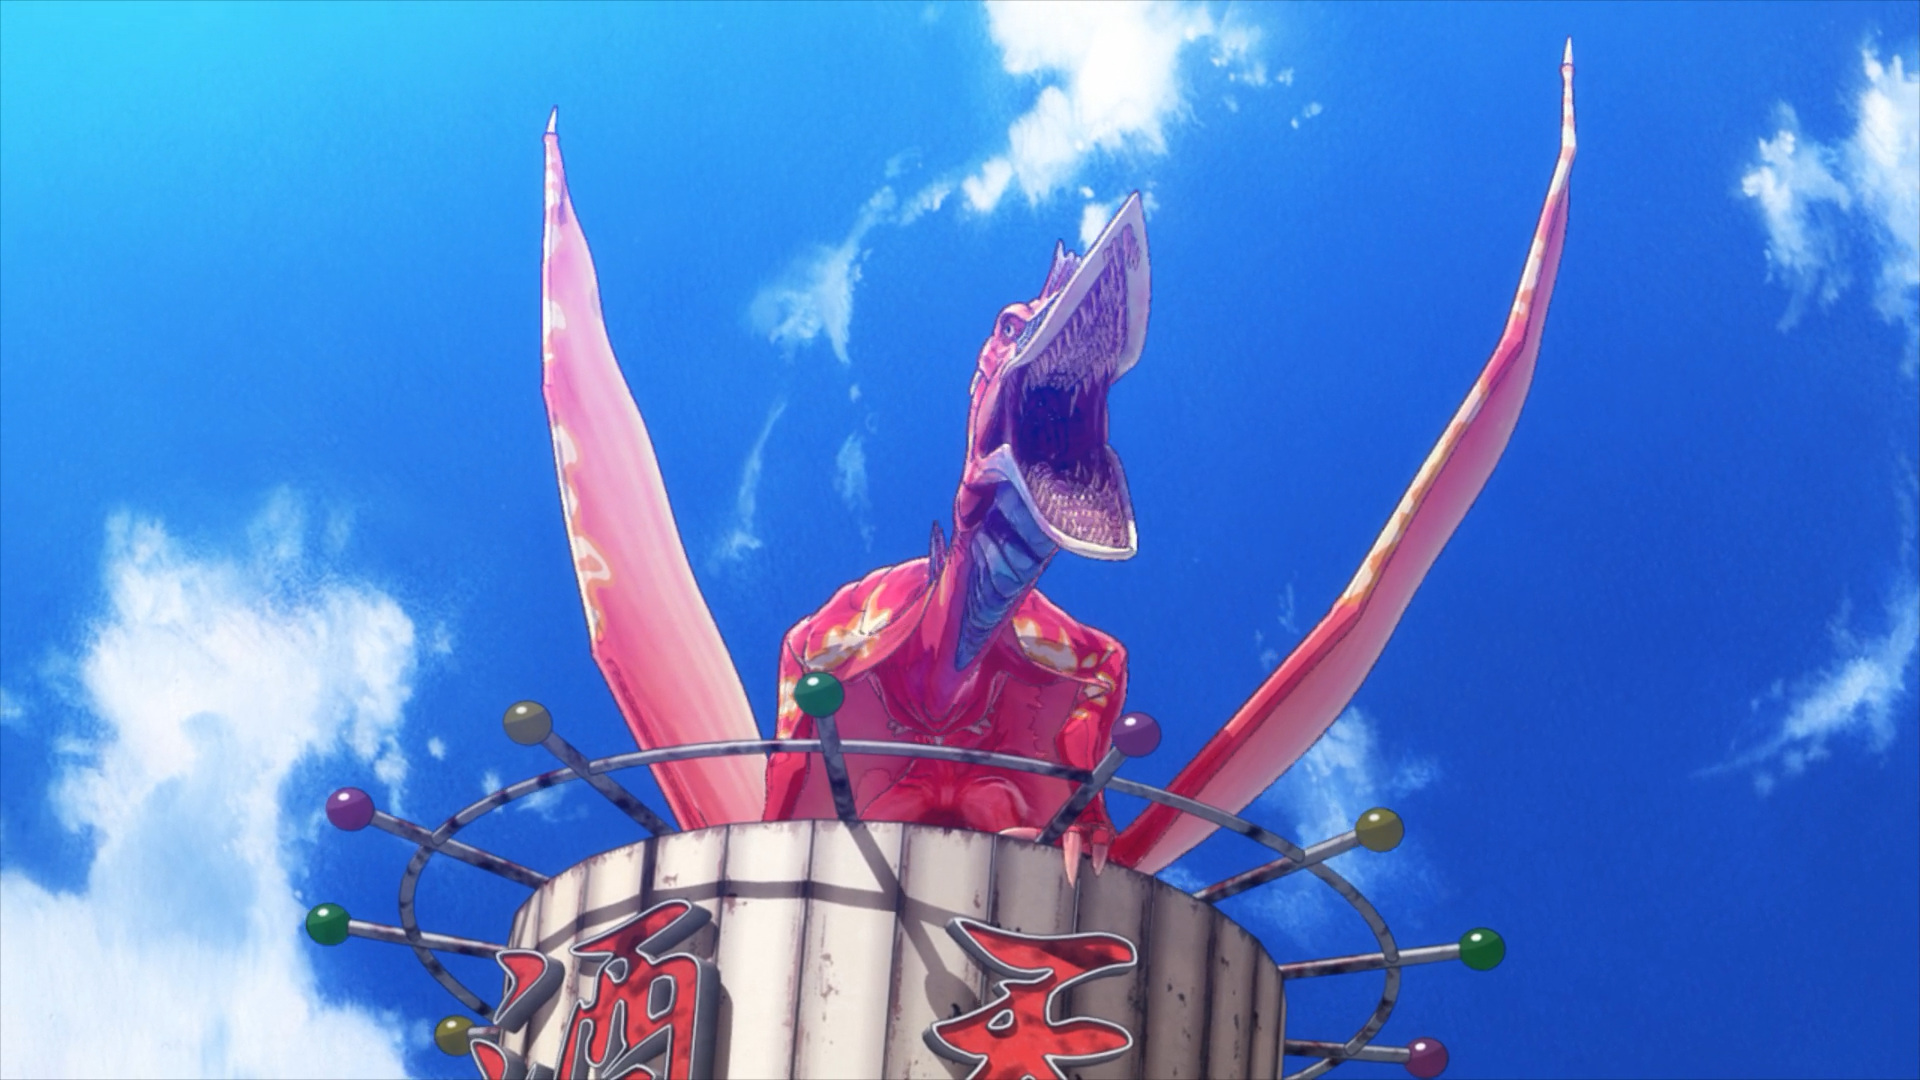 Godzilla Singular Point - The Modern Kaiju - I drink and watch anime